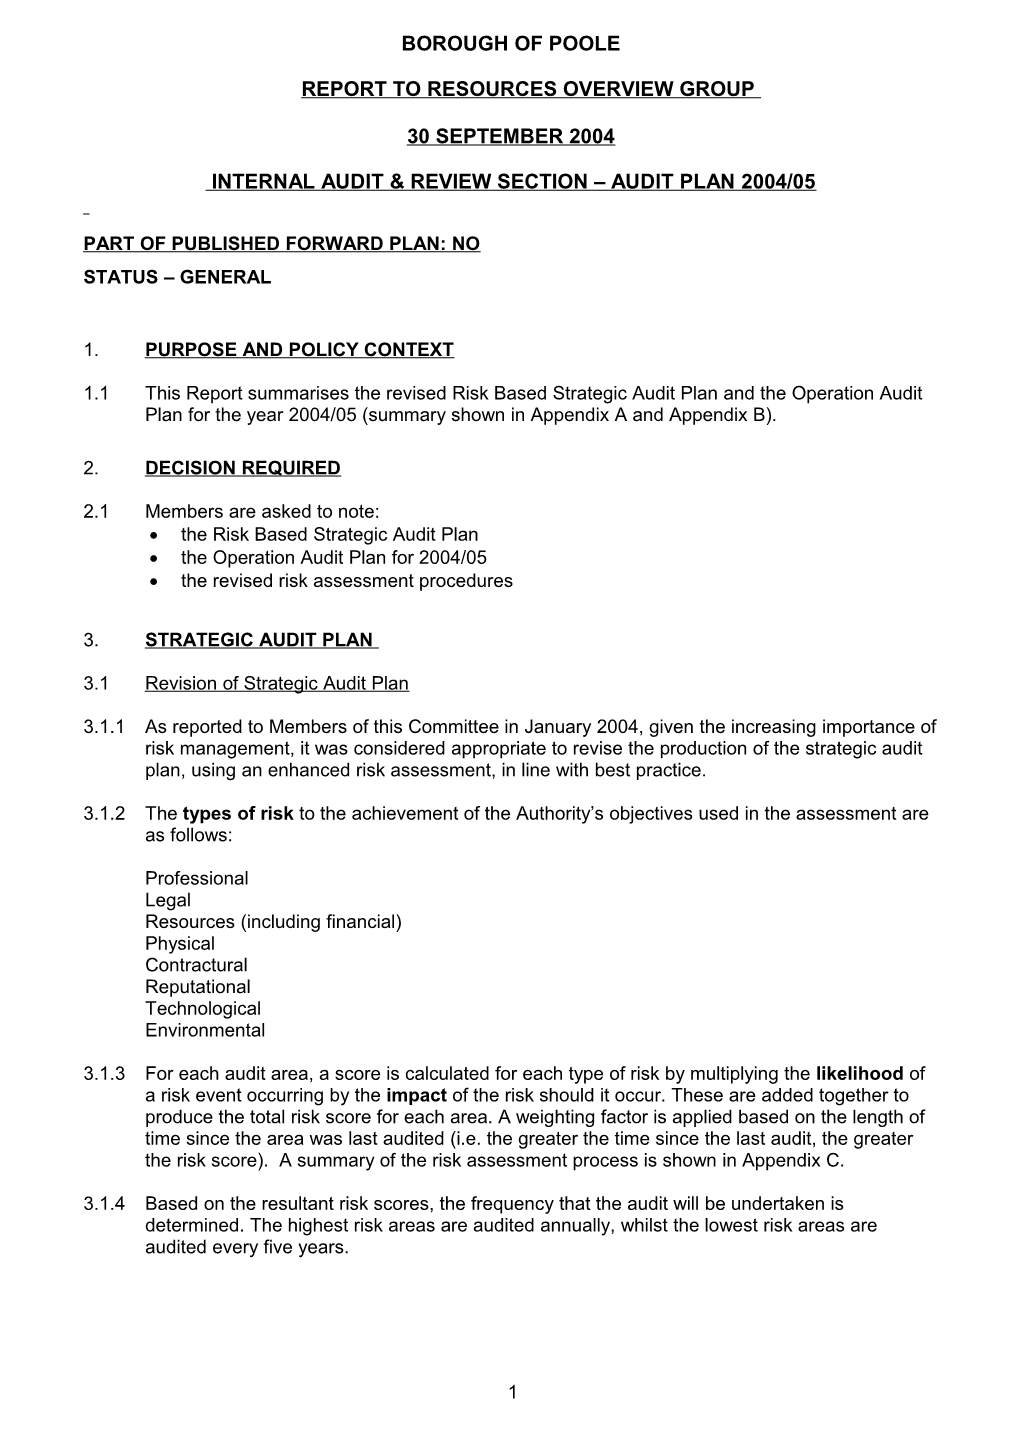 Internal Audit & Review Section Audit Plan 2004/05